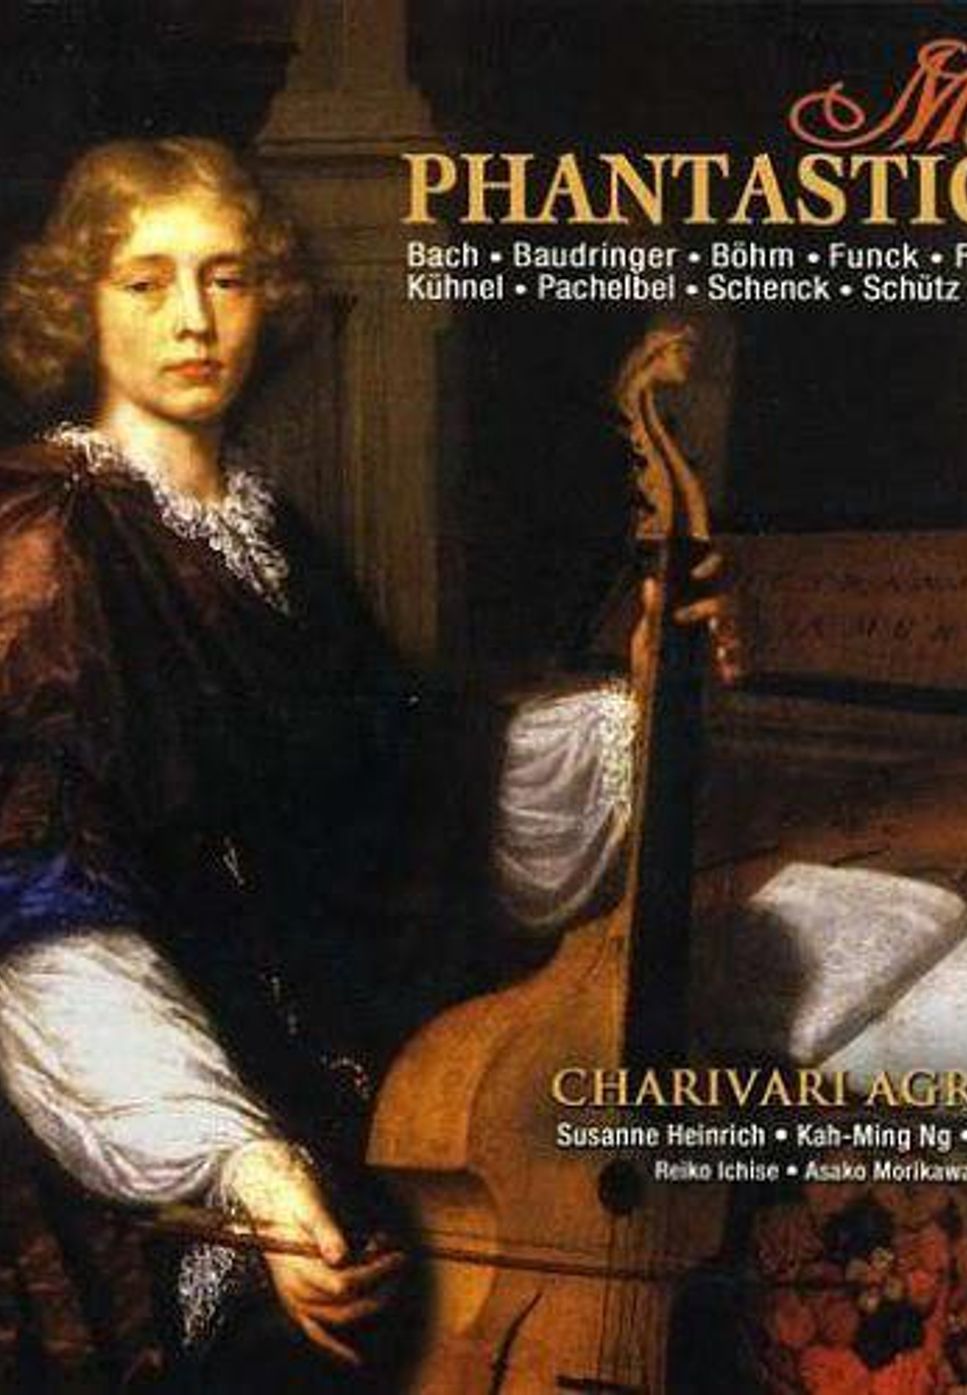 Georg Philipp Telemann - 4 Concerti for 4 Violins, TWV 40:202 (Telemann - String Quartet Original - Score and Parts) by poon